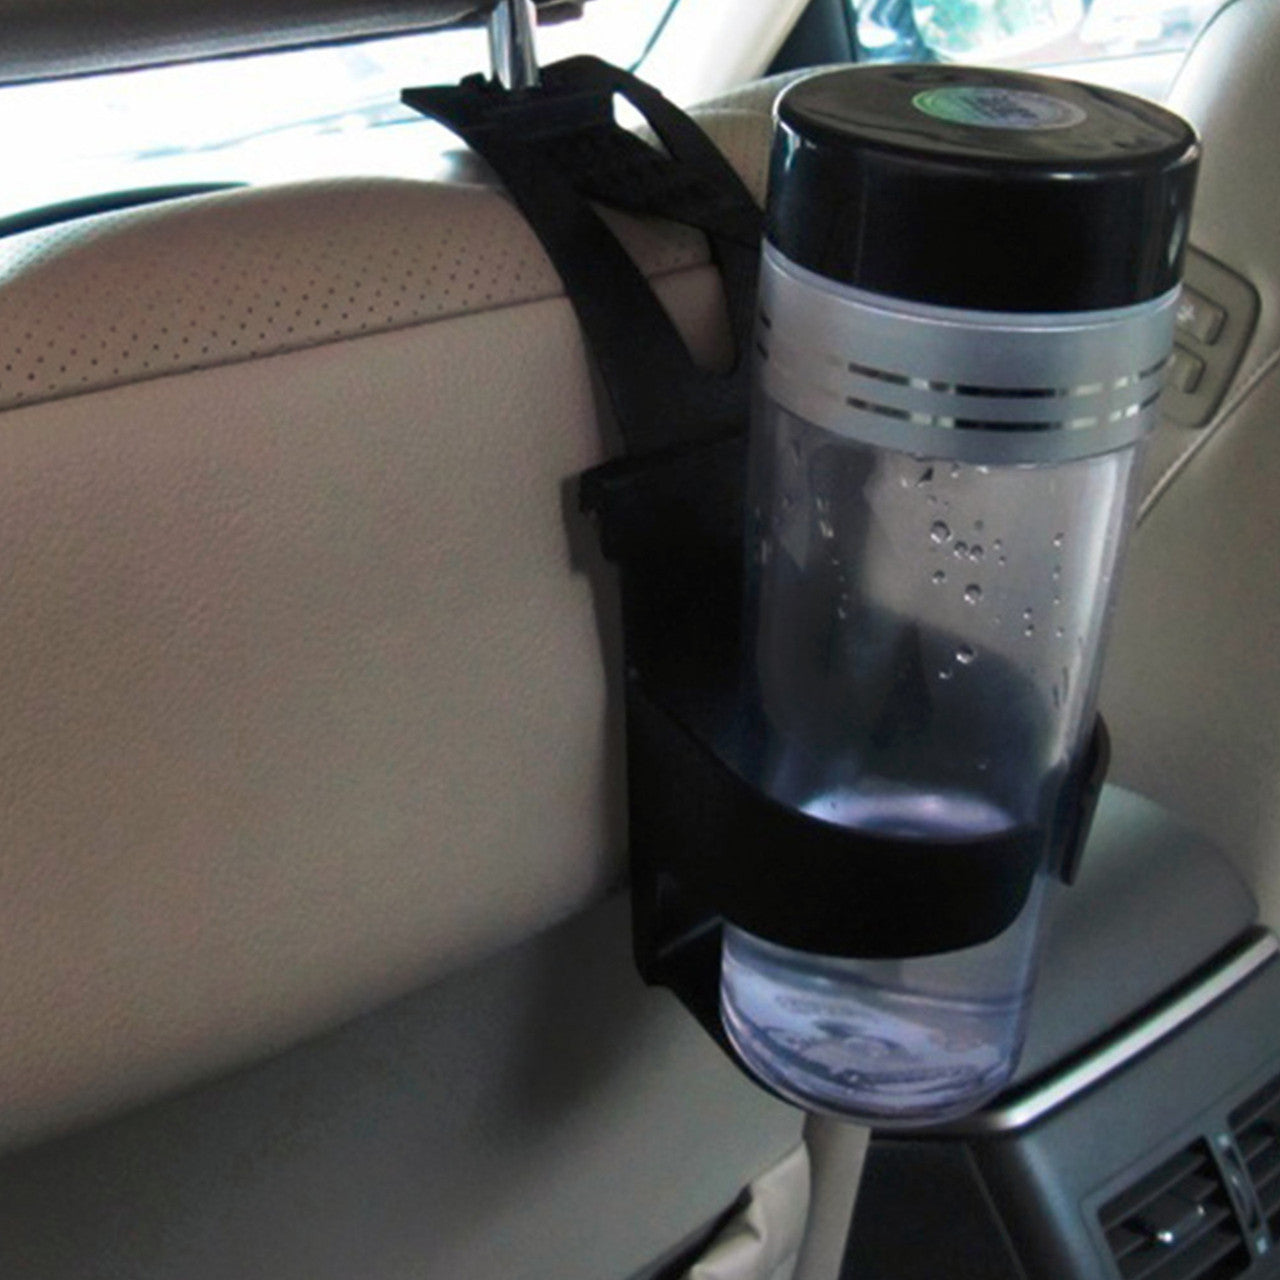 Plastic Car Cup Holder, Adjustable Drink Bottle Coffee Cup Holder Hanger for SUVs Cars Truck Jeep (Black), 2 Pack